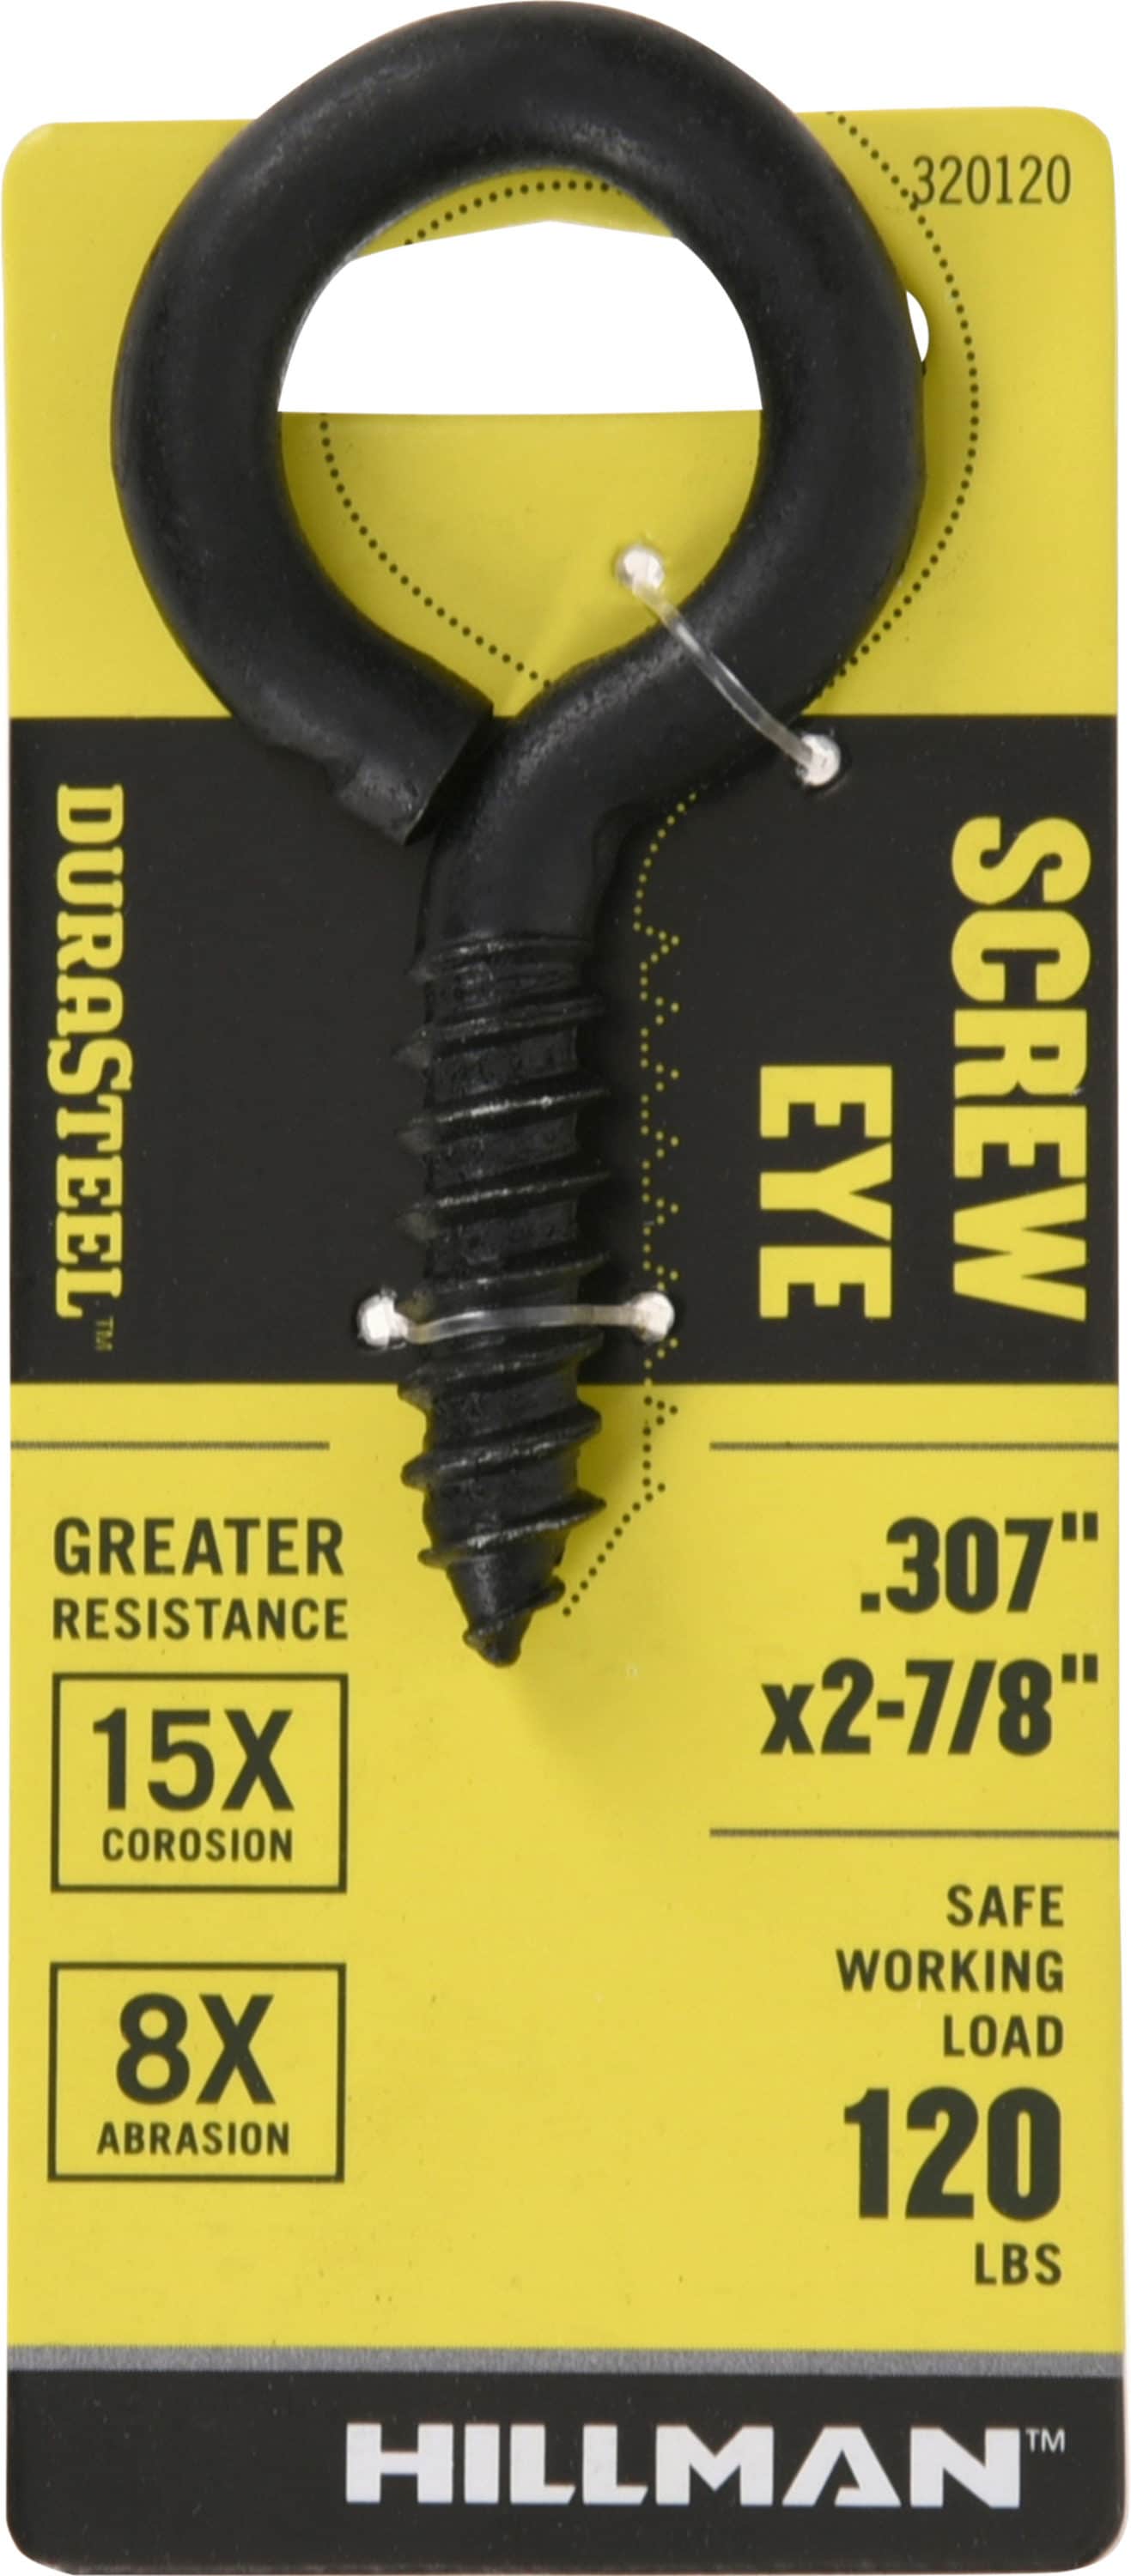 DuraSteel 0.125-in Black Steel Screw Eye Hook in the Hooks